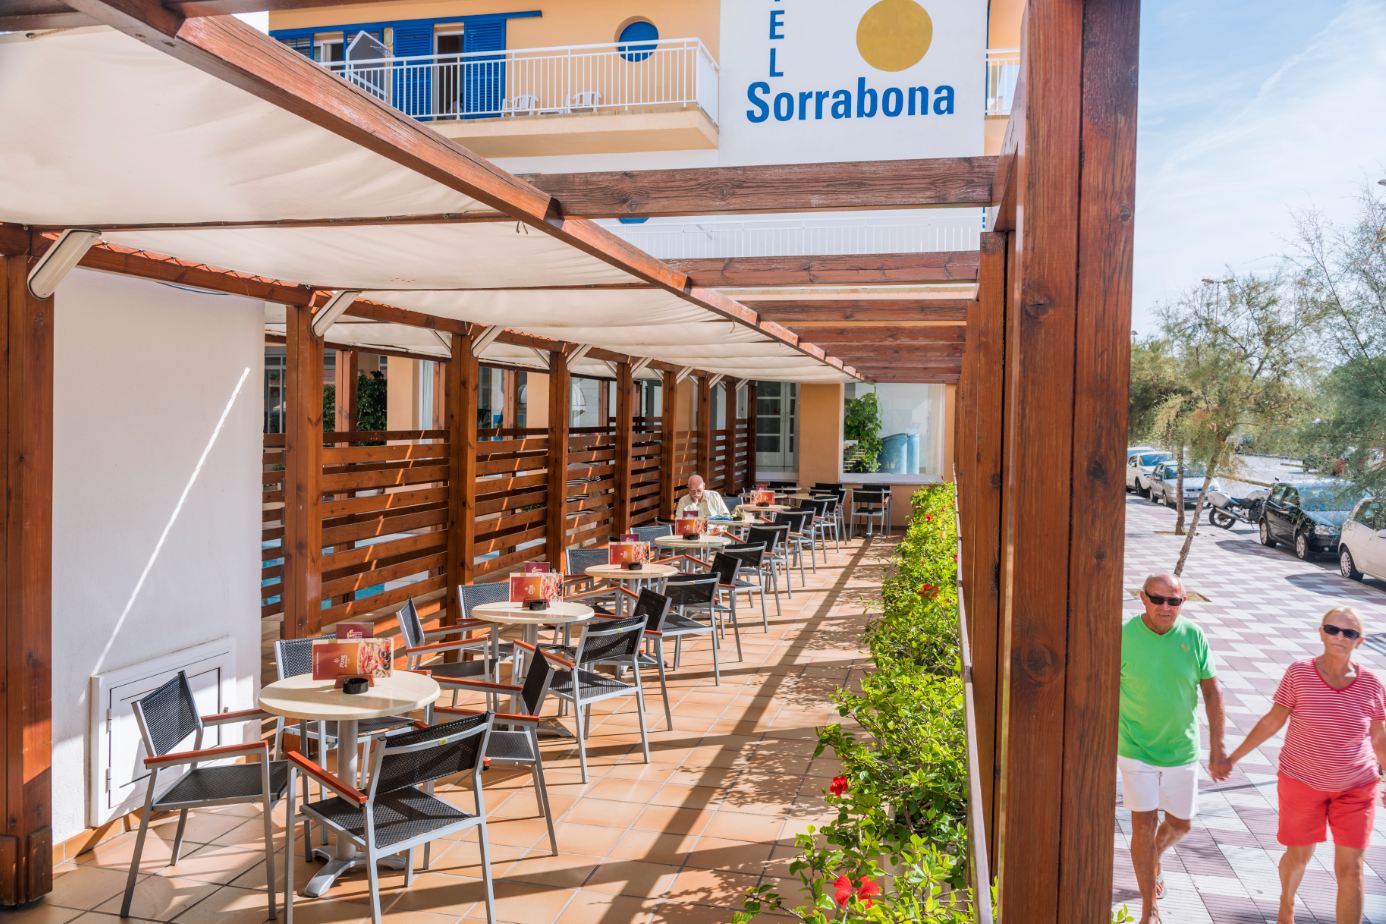 Hotel Sorrabona